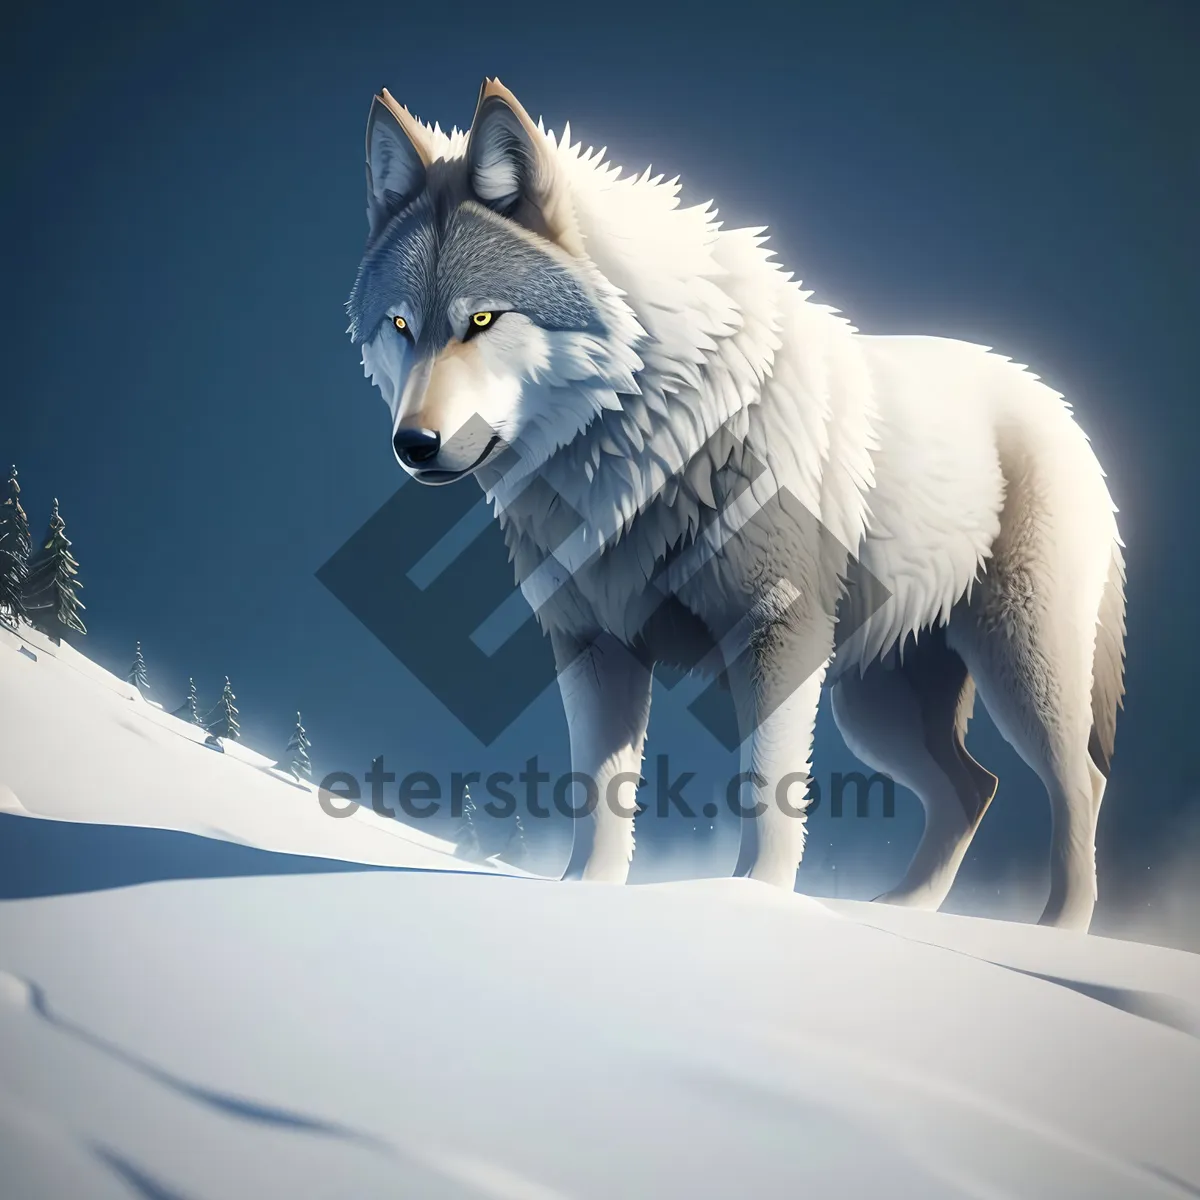 Picture of Snowy White Wolf in Winter Wonderland